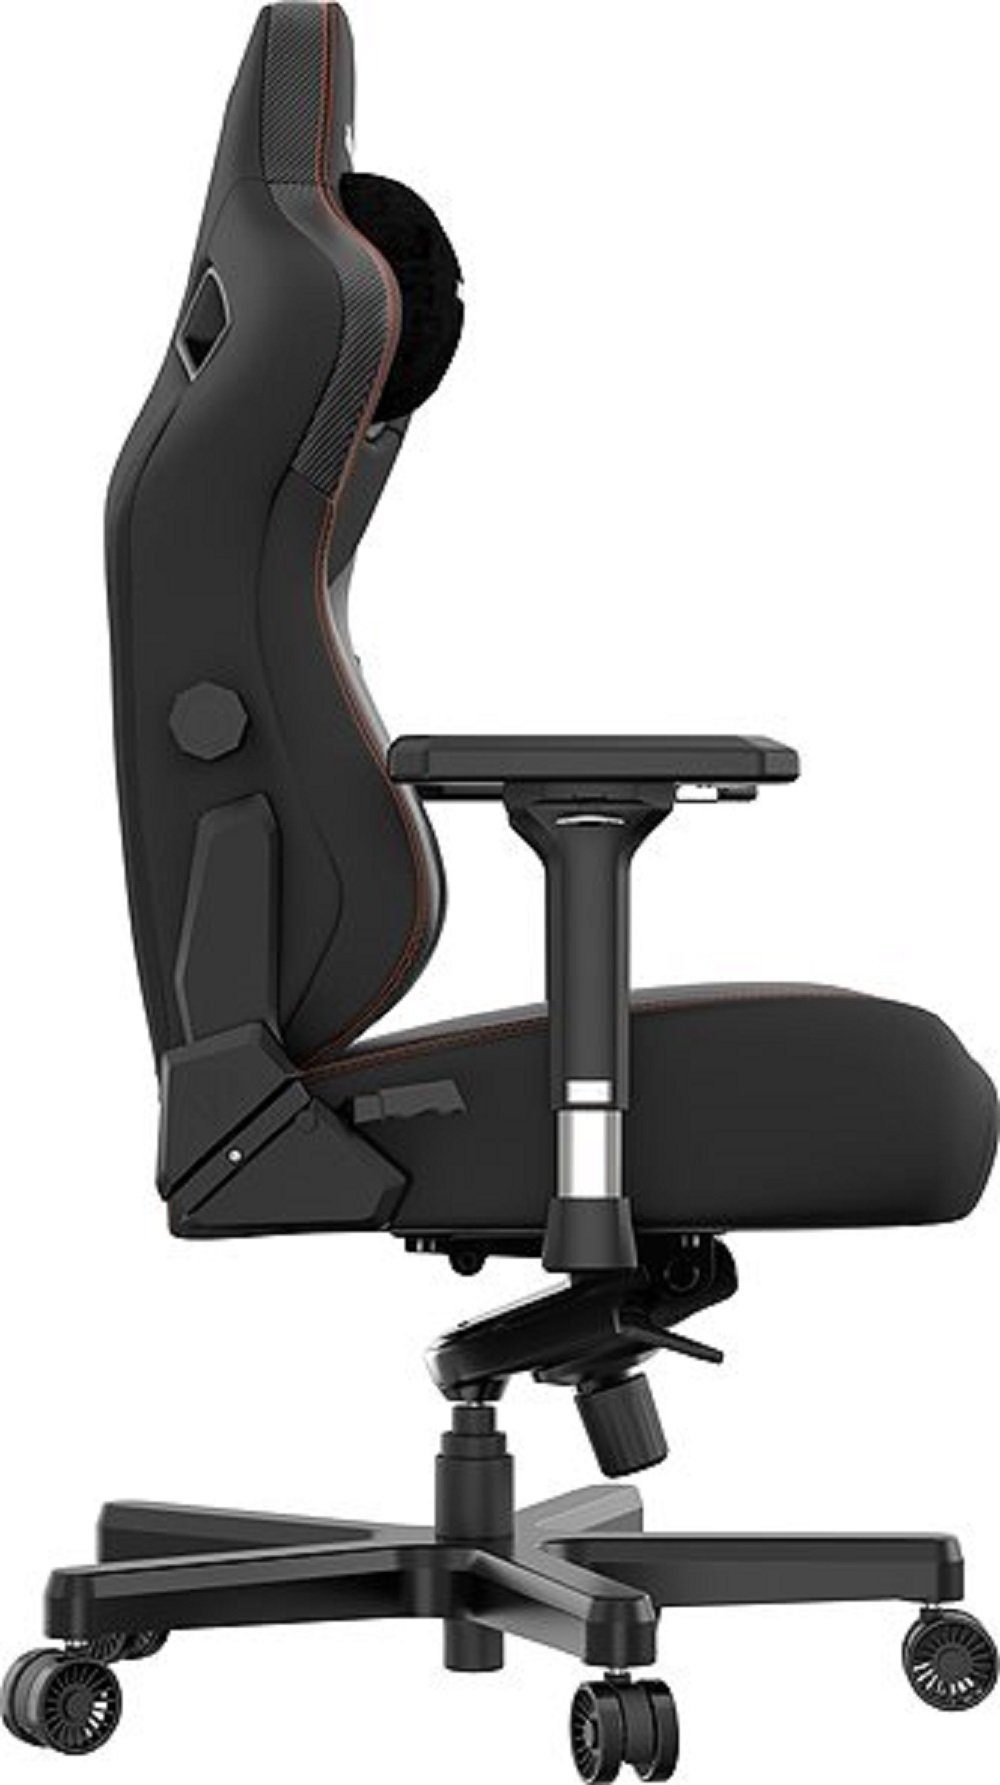 L anda 3 - Series Premium Kaiser Gaming-Stuhl Gaming seaT Chair